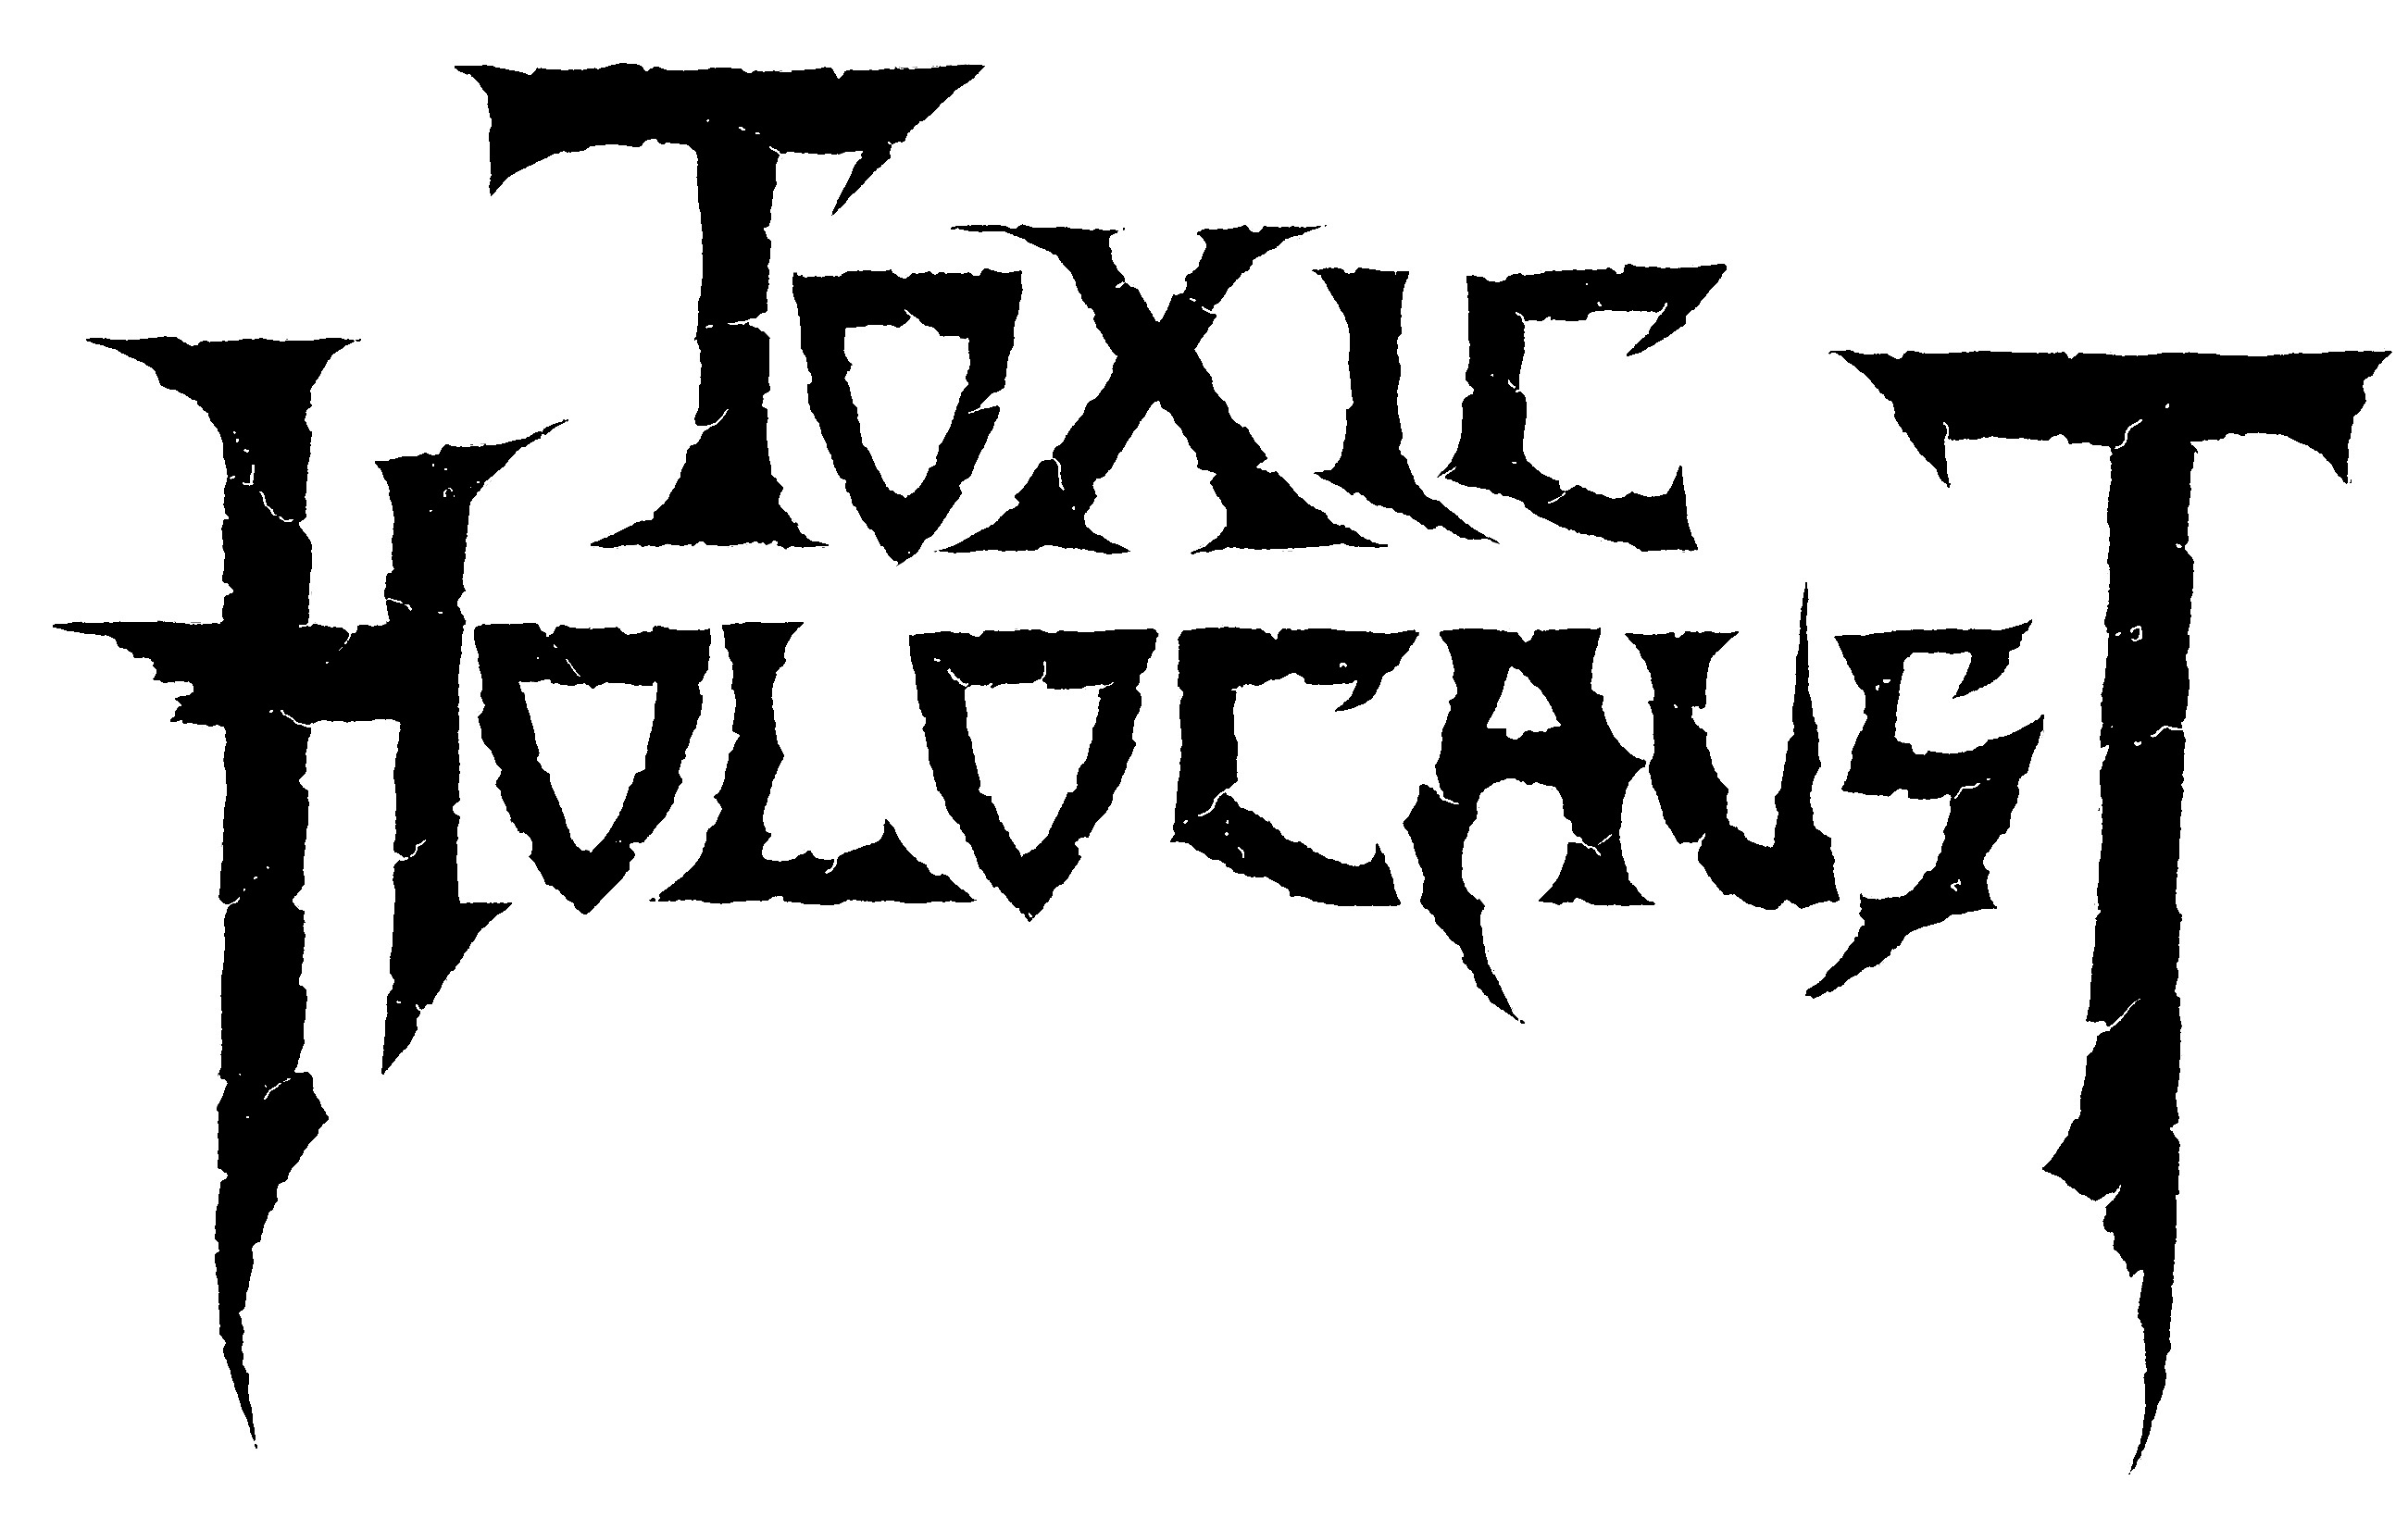 Toxic holocaust. Toxic Holocaust группа. Toxic Holocaust лого. Токсик Холокост. Toxic Holocaust Band logo.